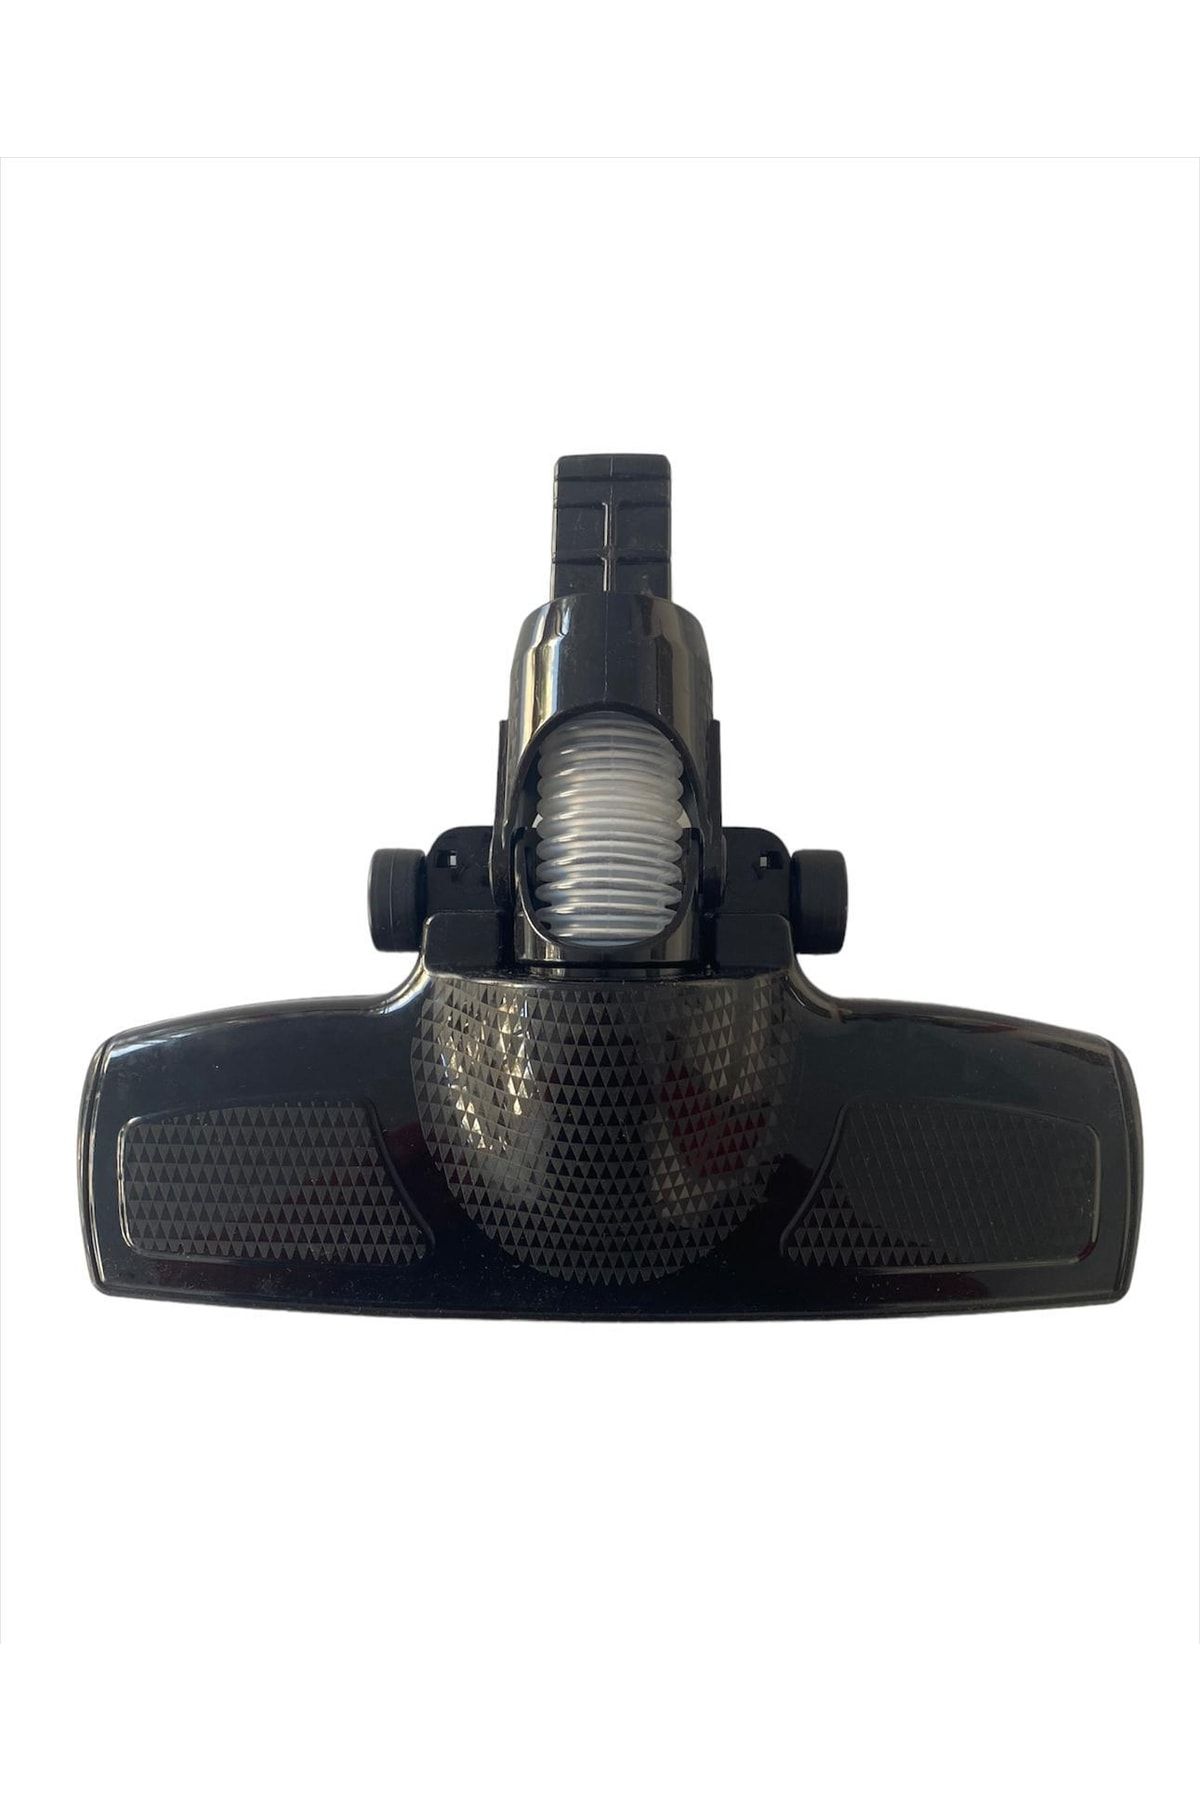 FANTOM Provac P5000 Süpürücü Başlık Siyah(KARE GİRİŞ)